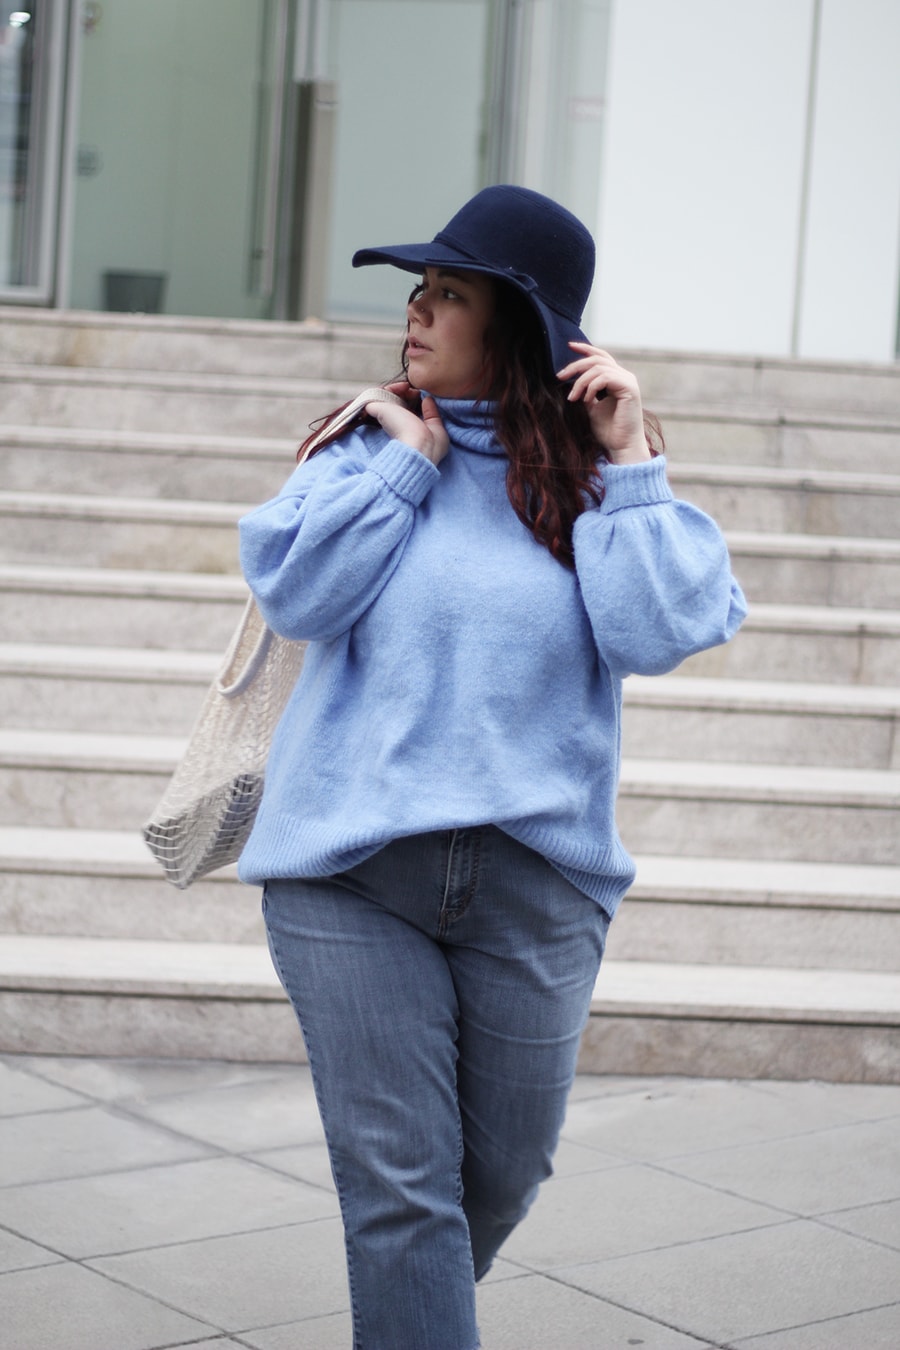 Blue turtle neck sweater - net bag trend - cowboy boots - plus size winter outfit